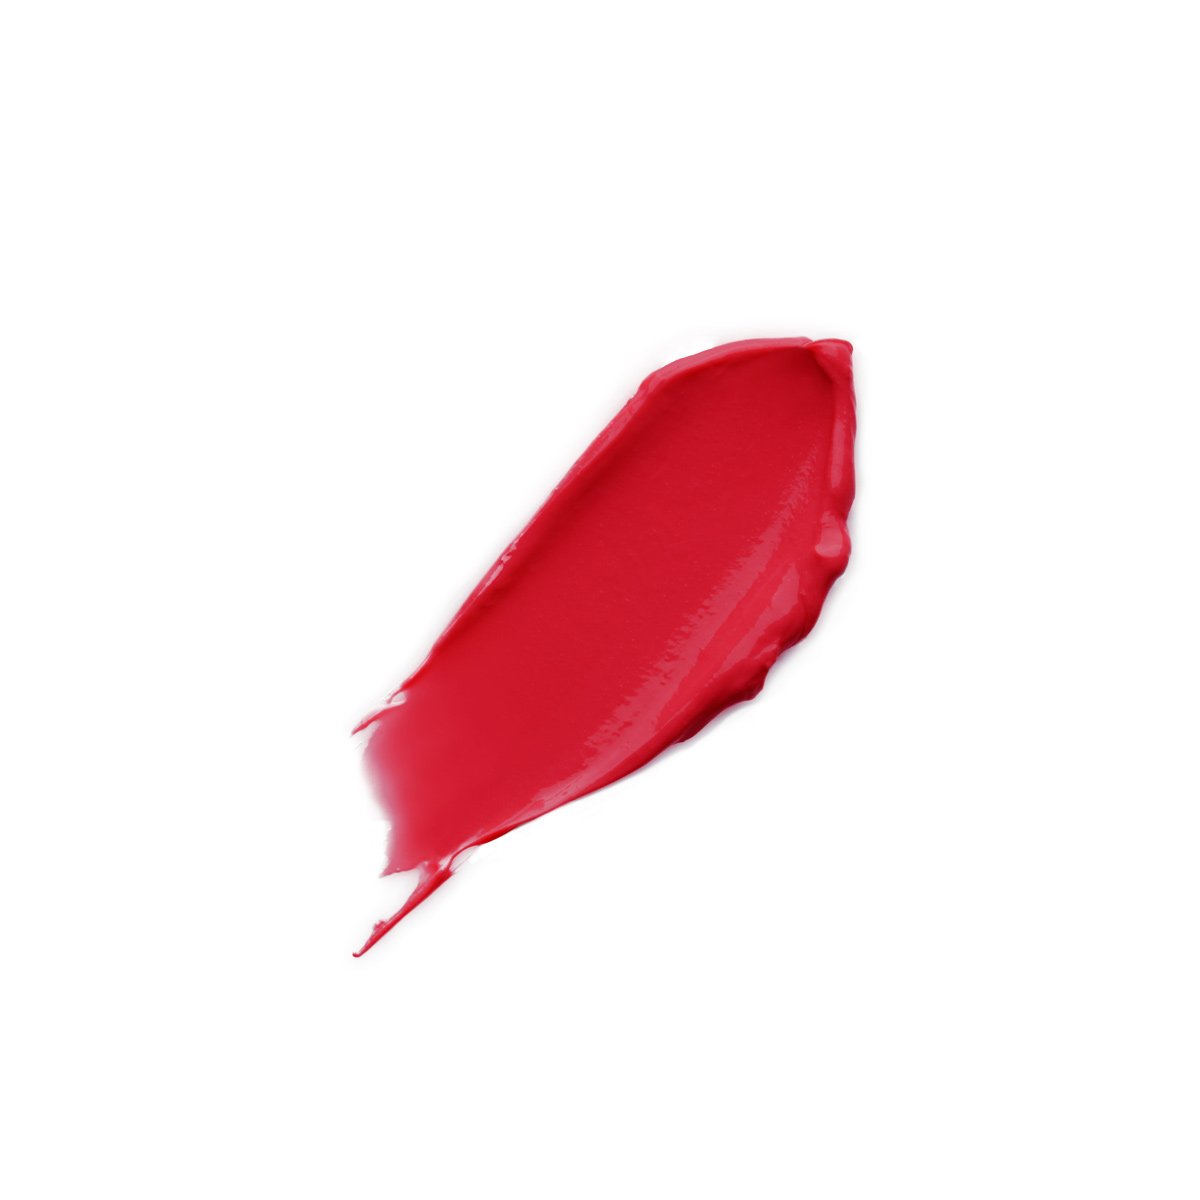 RUBIS - BLUE RED - blue red lipstick lip balm